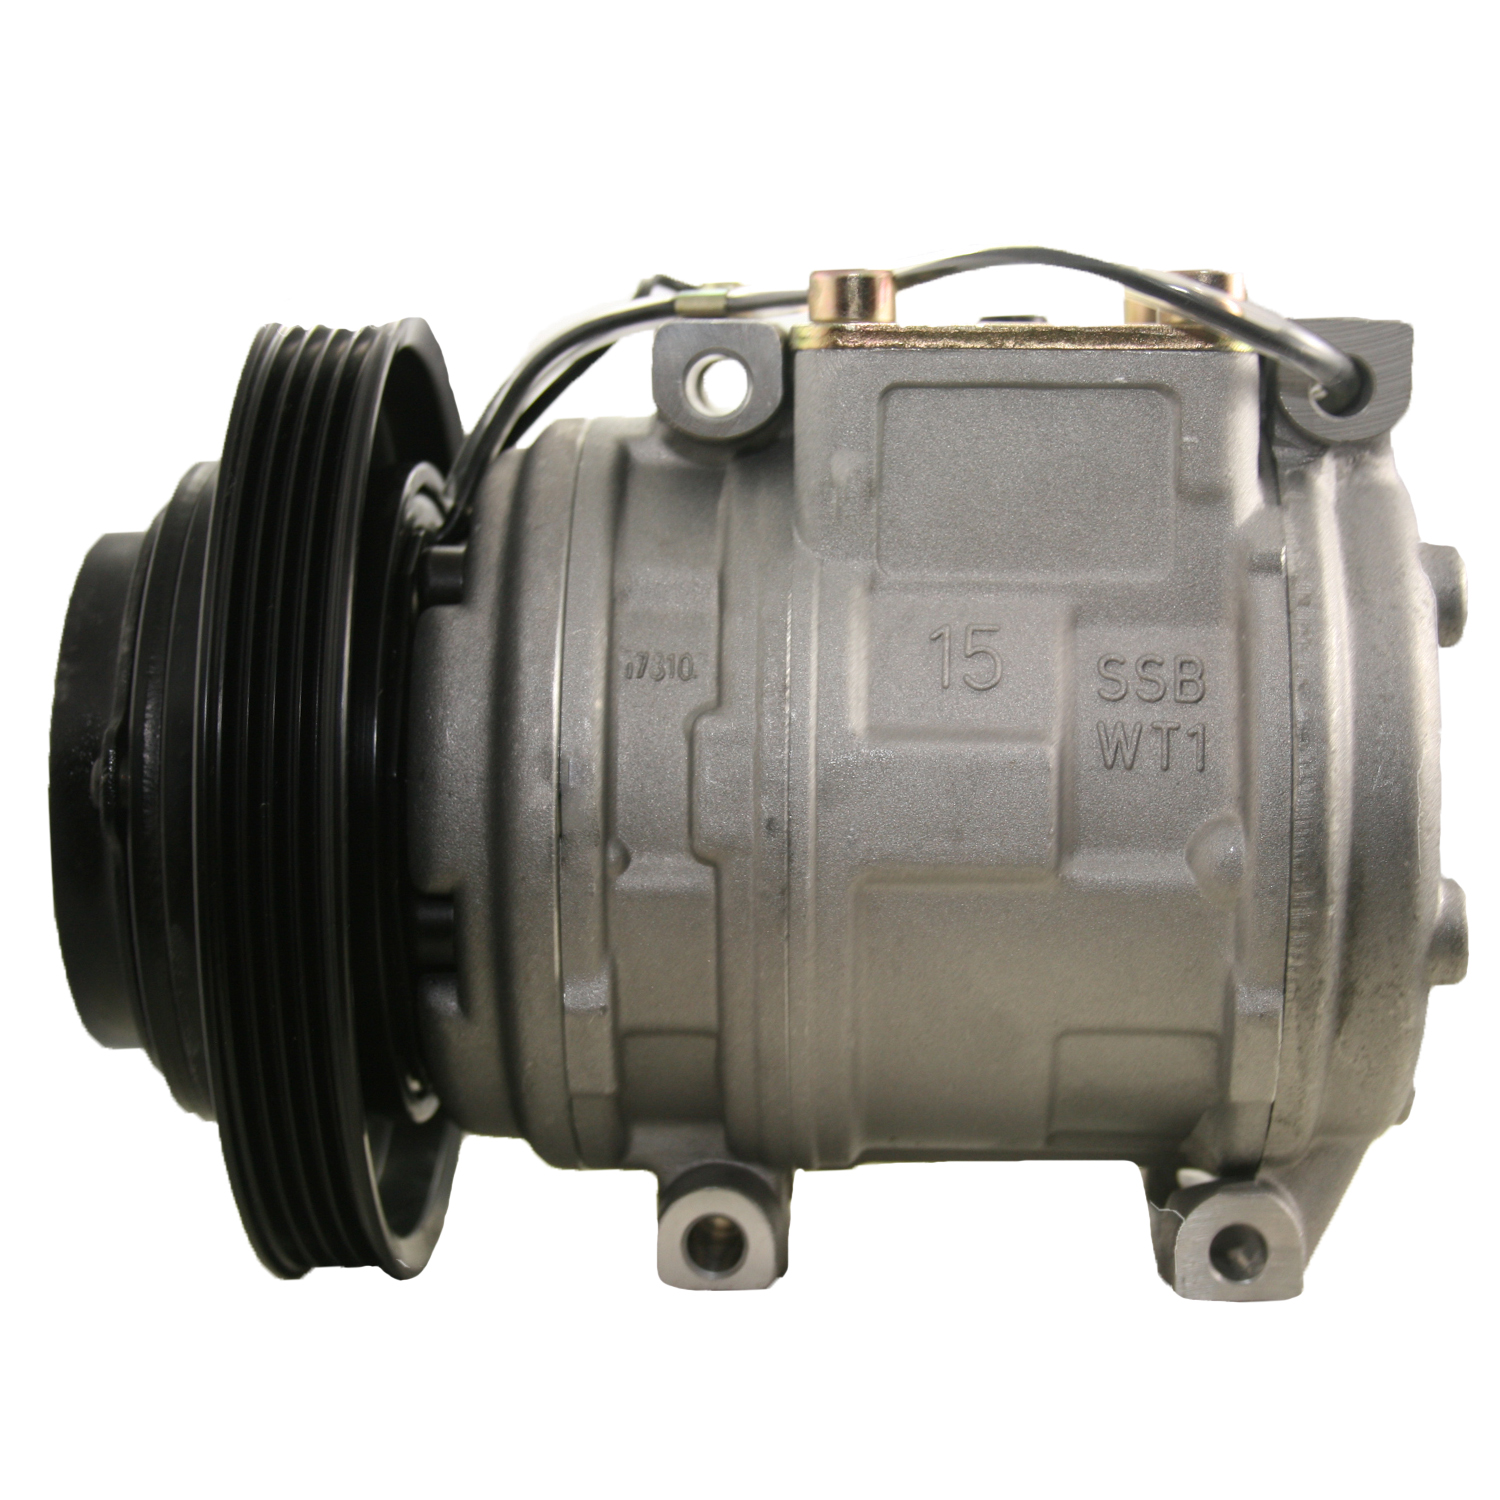 TCW Compressor 31210.410NEW New Product Image field_60b6a13a6e67c